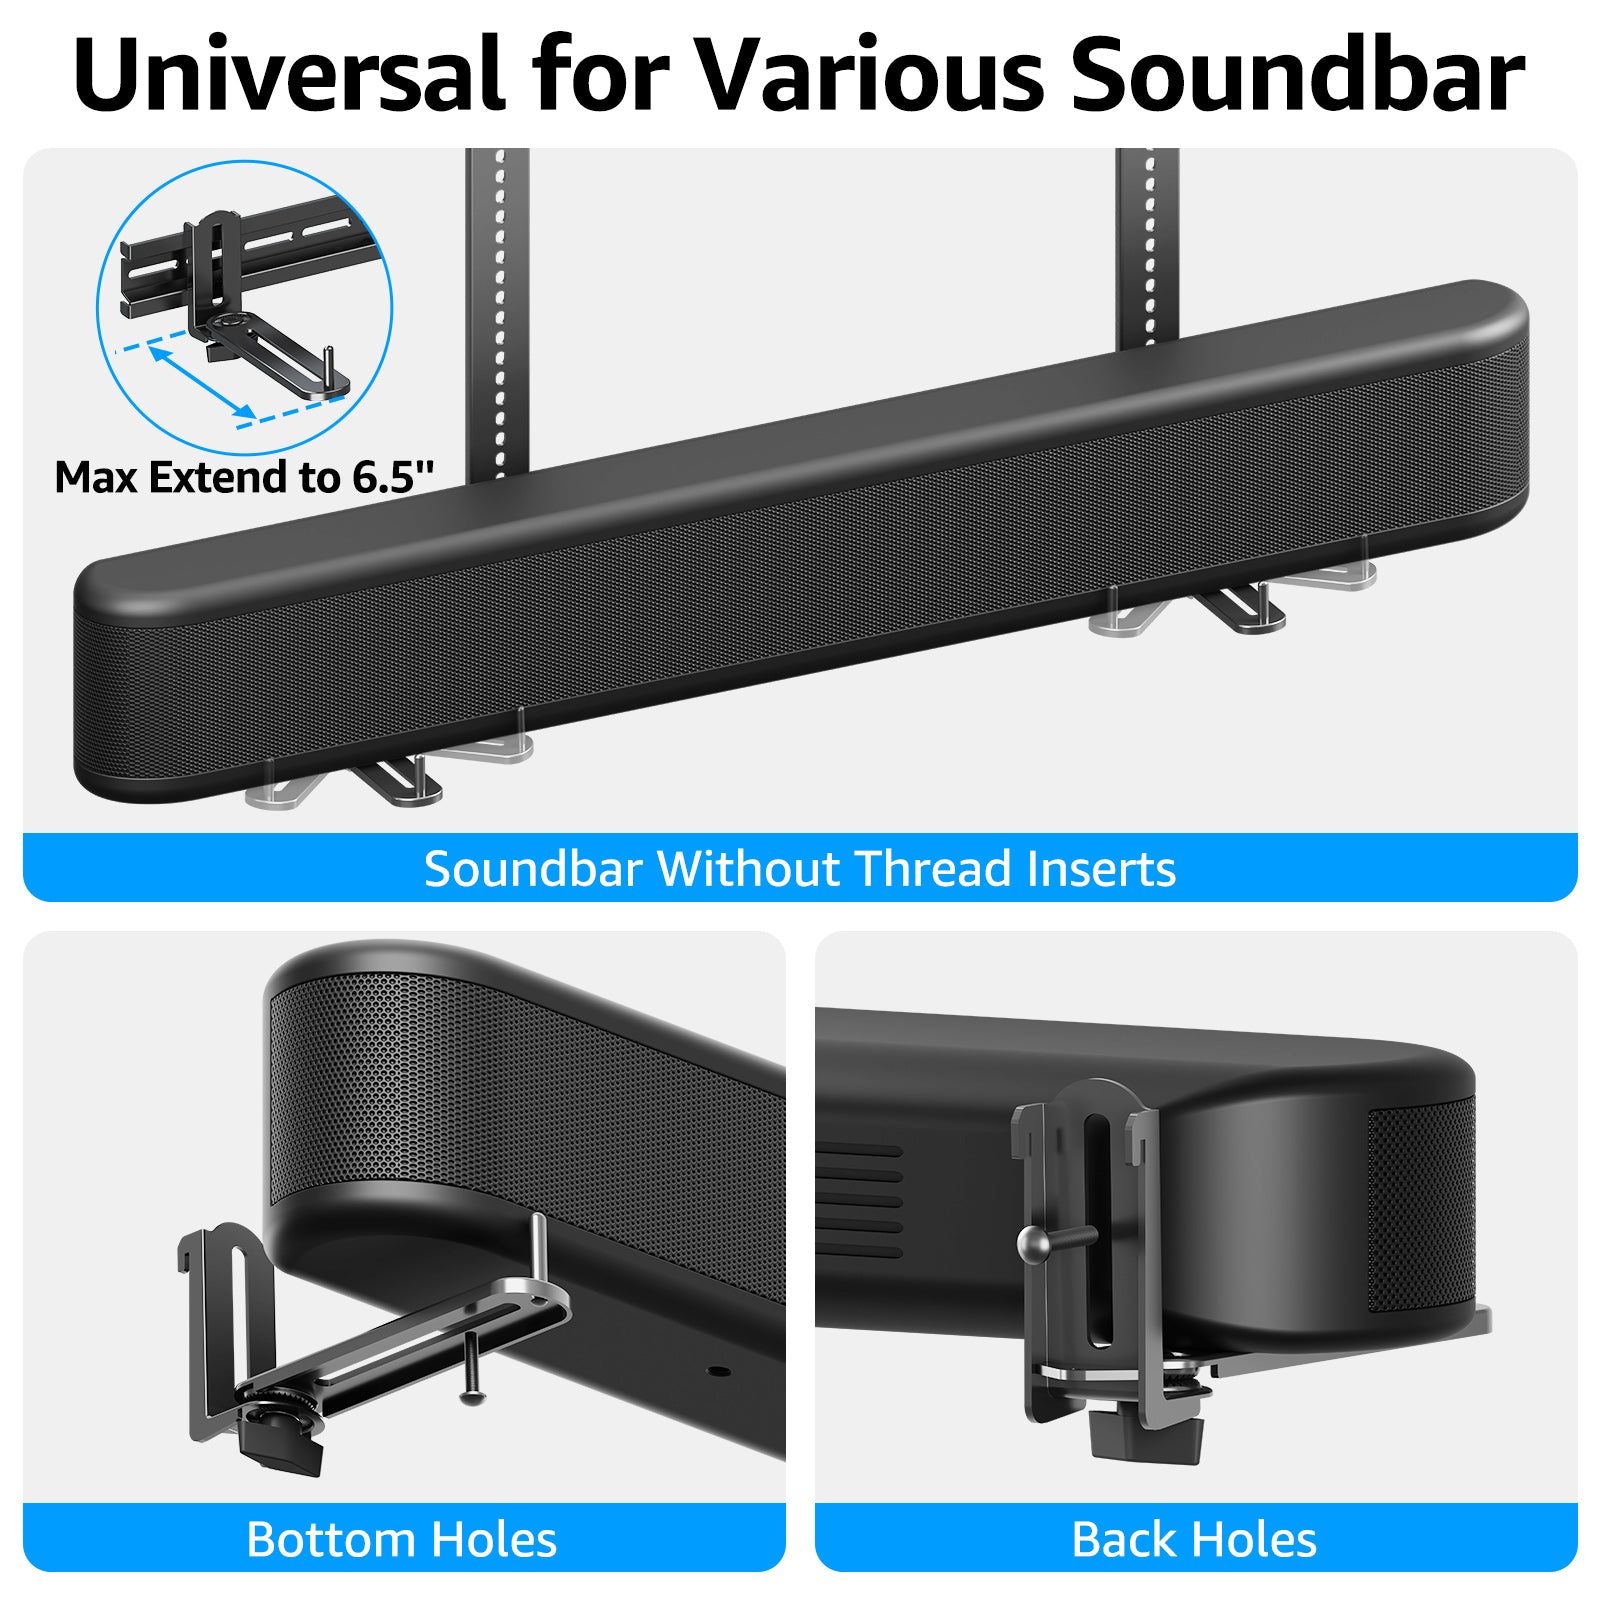 Universal Soundbar Mount Sound bar Bracket MUS-9122